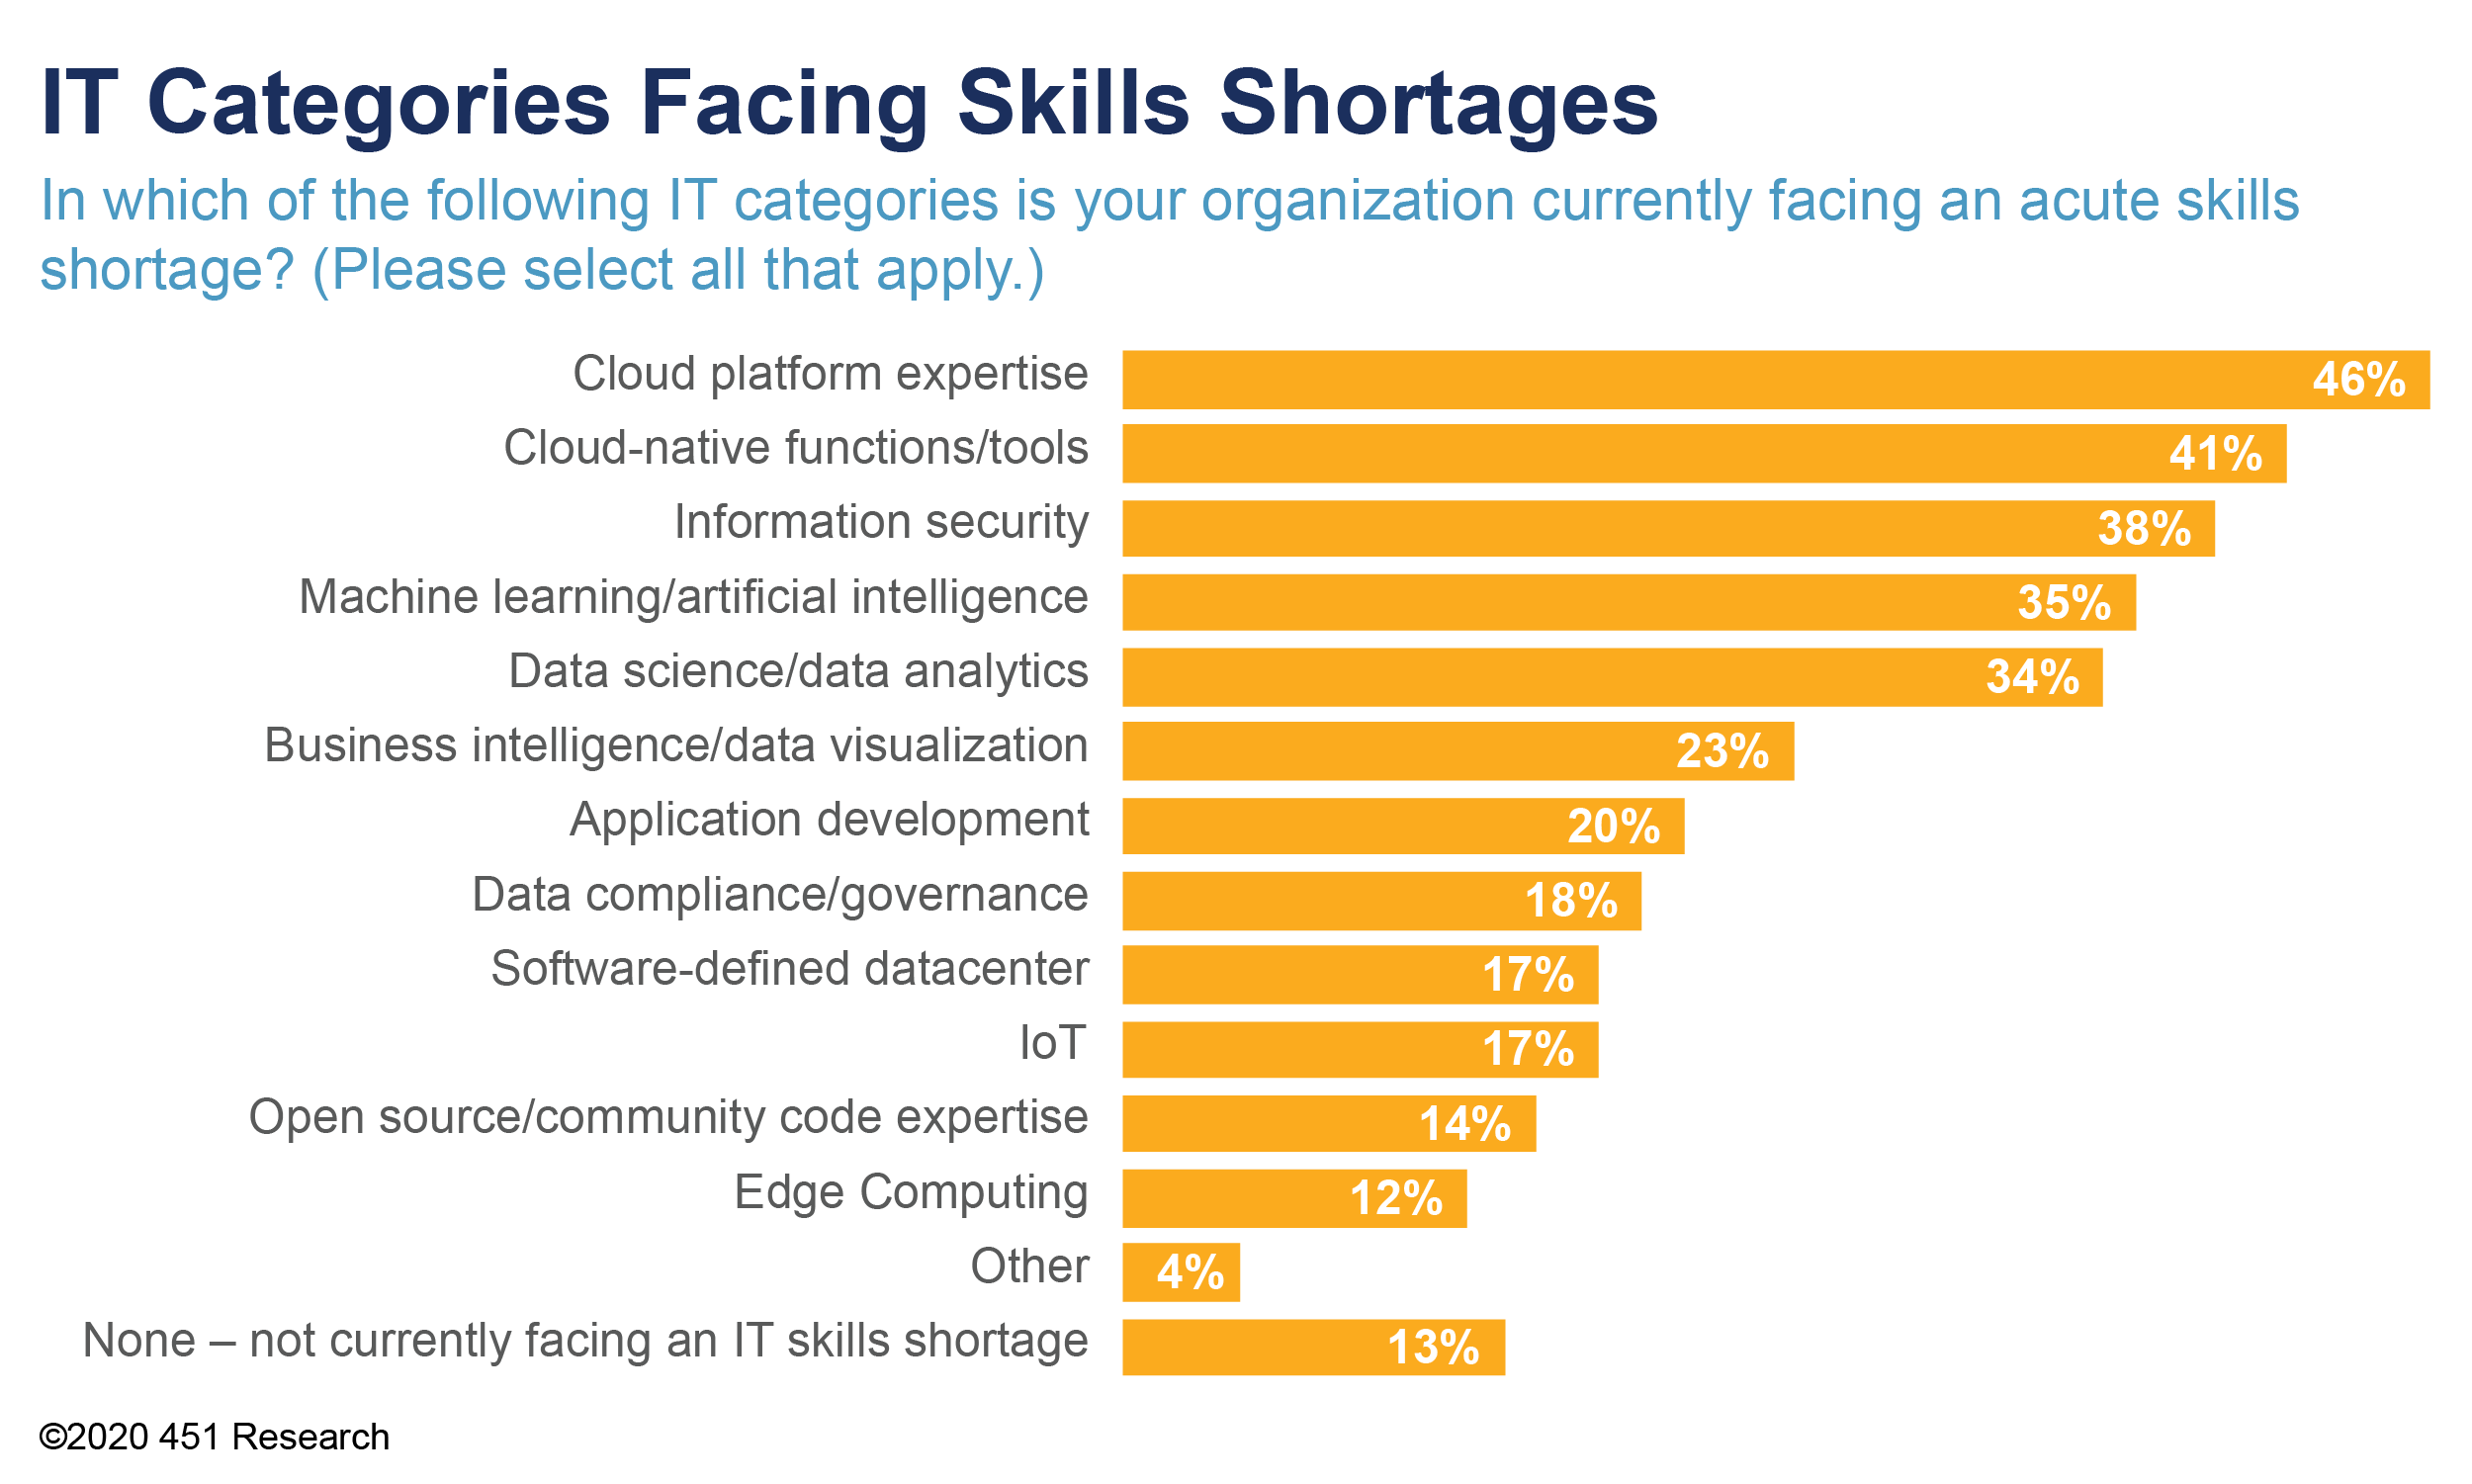 IT categories facing skills shortages